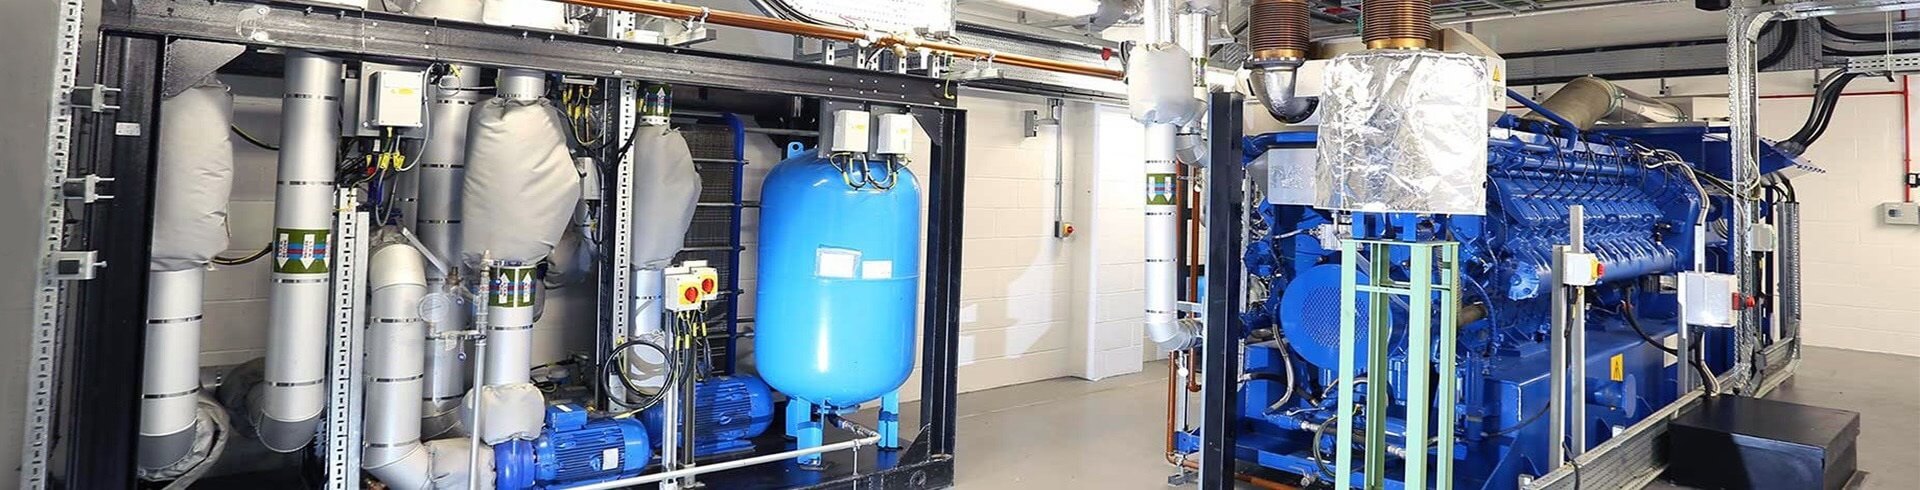 MWM 1000kW biogas engine generator cogeneration & CHP ETTES POWER